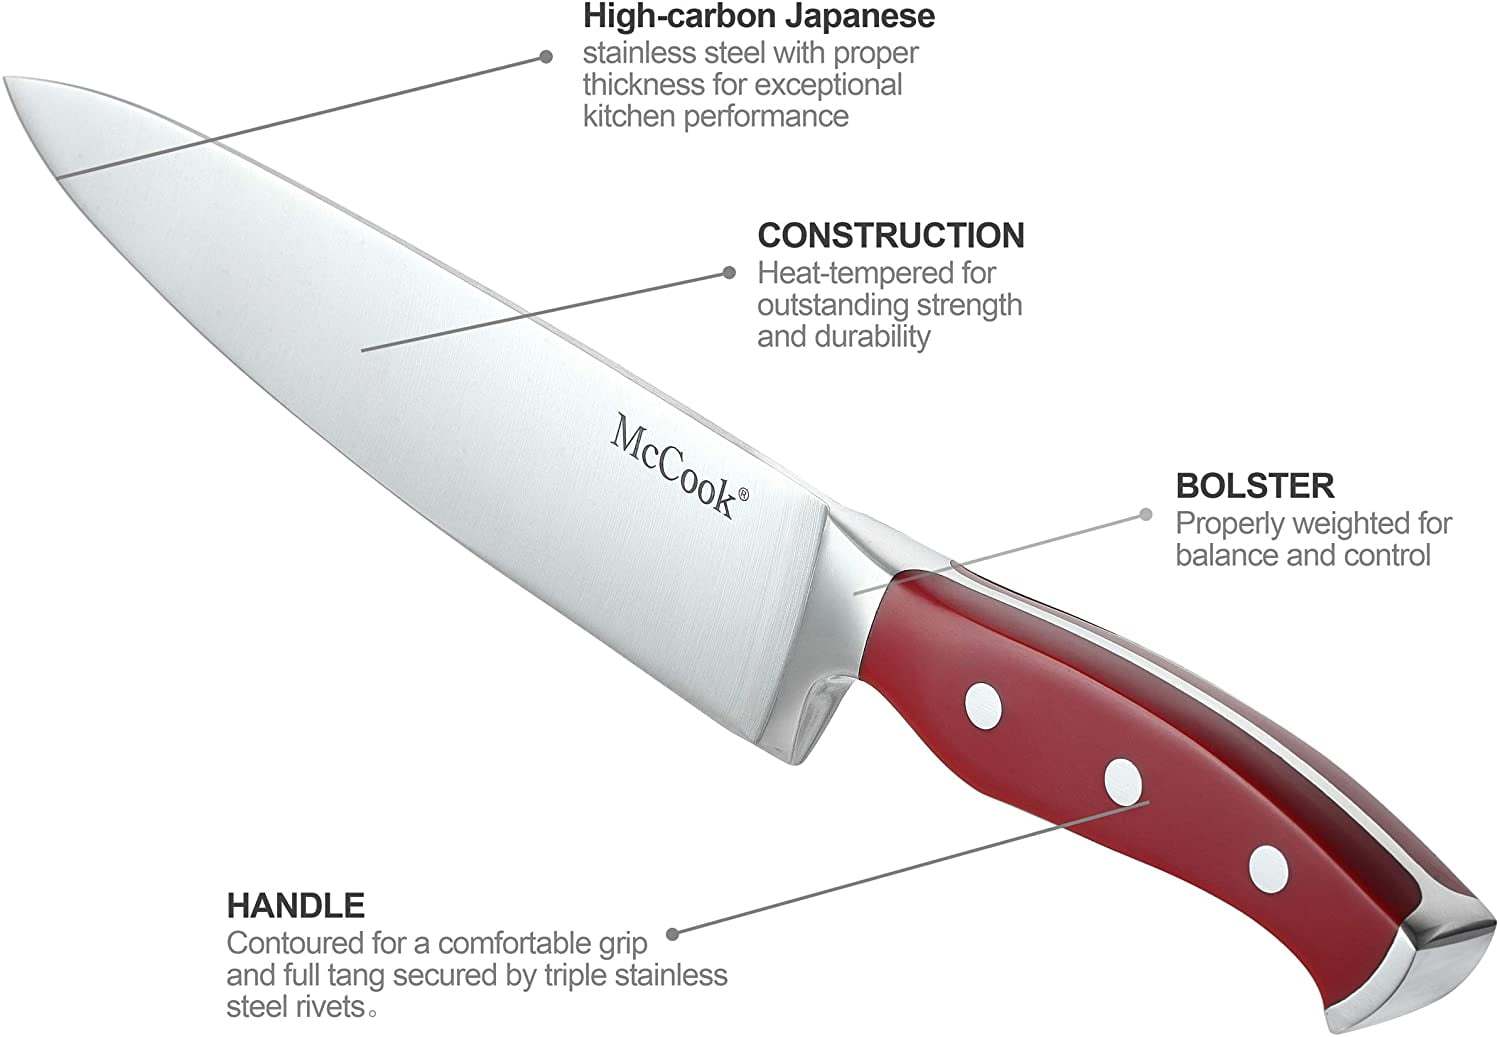 McCook® Knife Sets, German Stainless Steel Forged Kitchen Knives Block Set  with Built-in Knife Sharpener